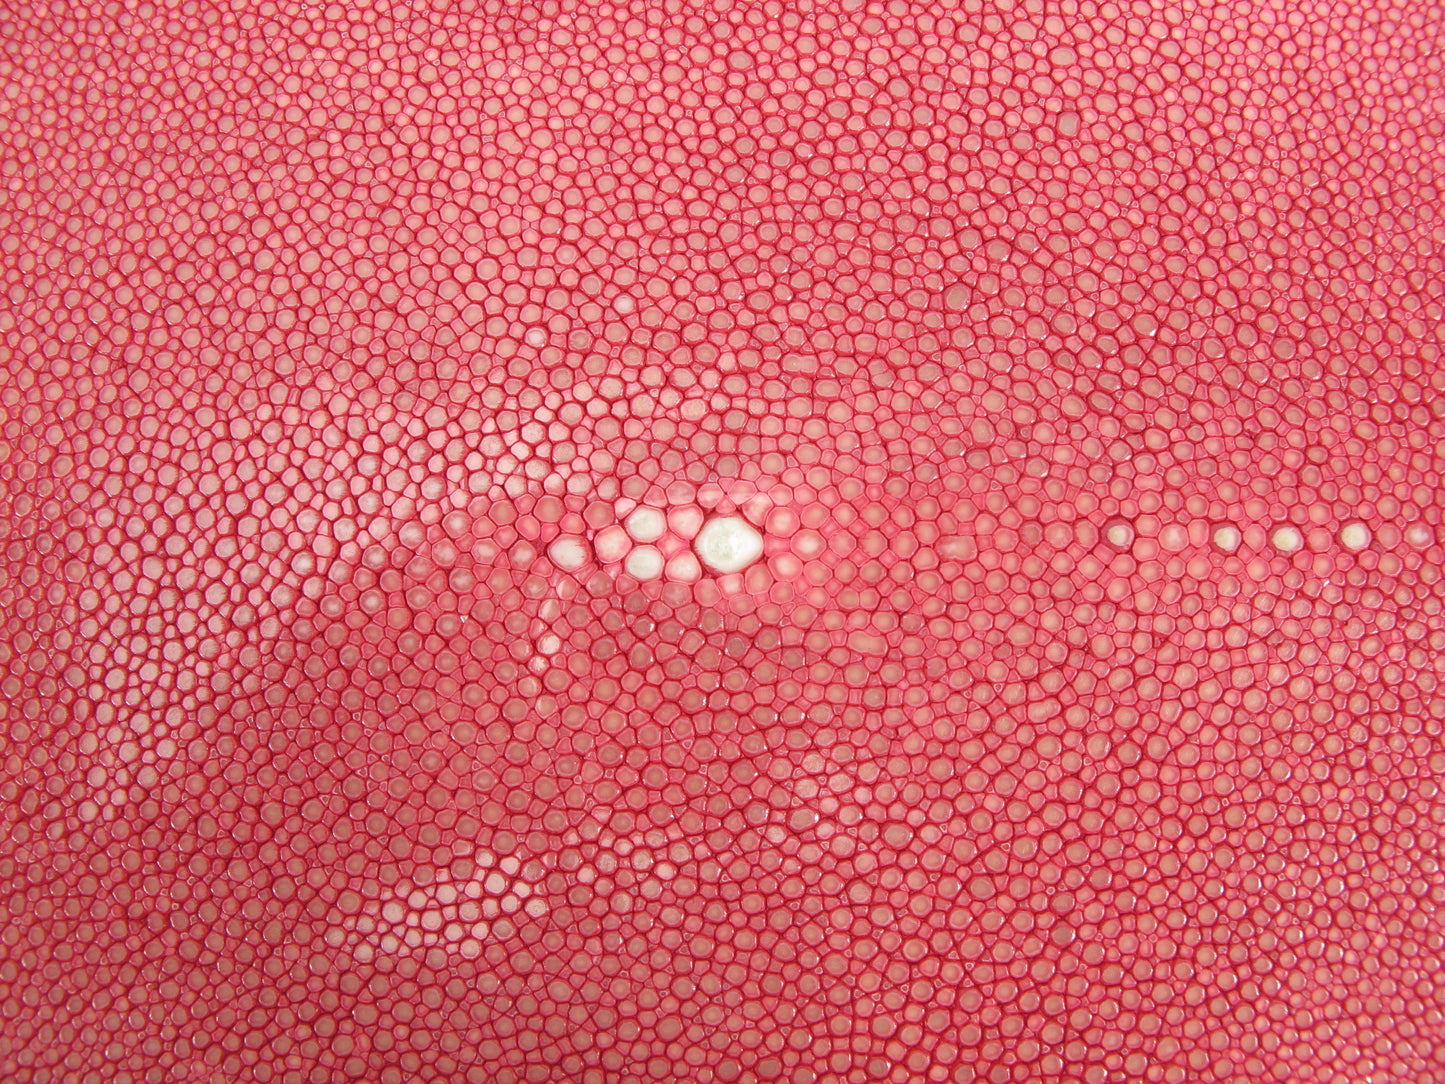 Genuine Polished Stingray Skin Leather Hide Pelt Long Shape Pink